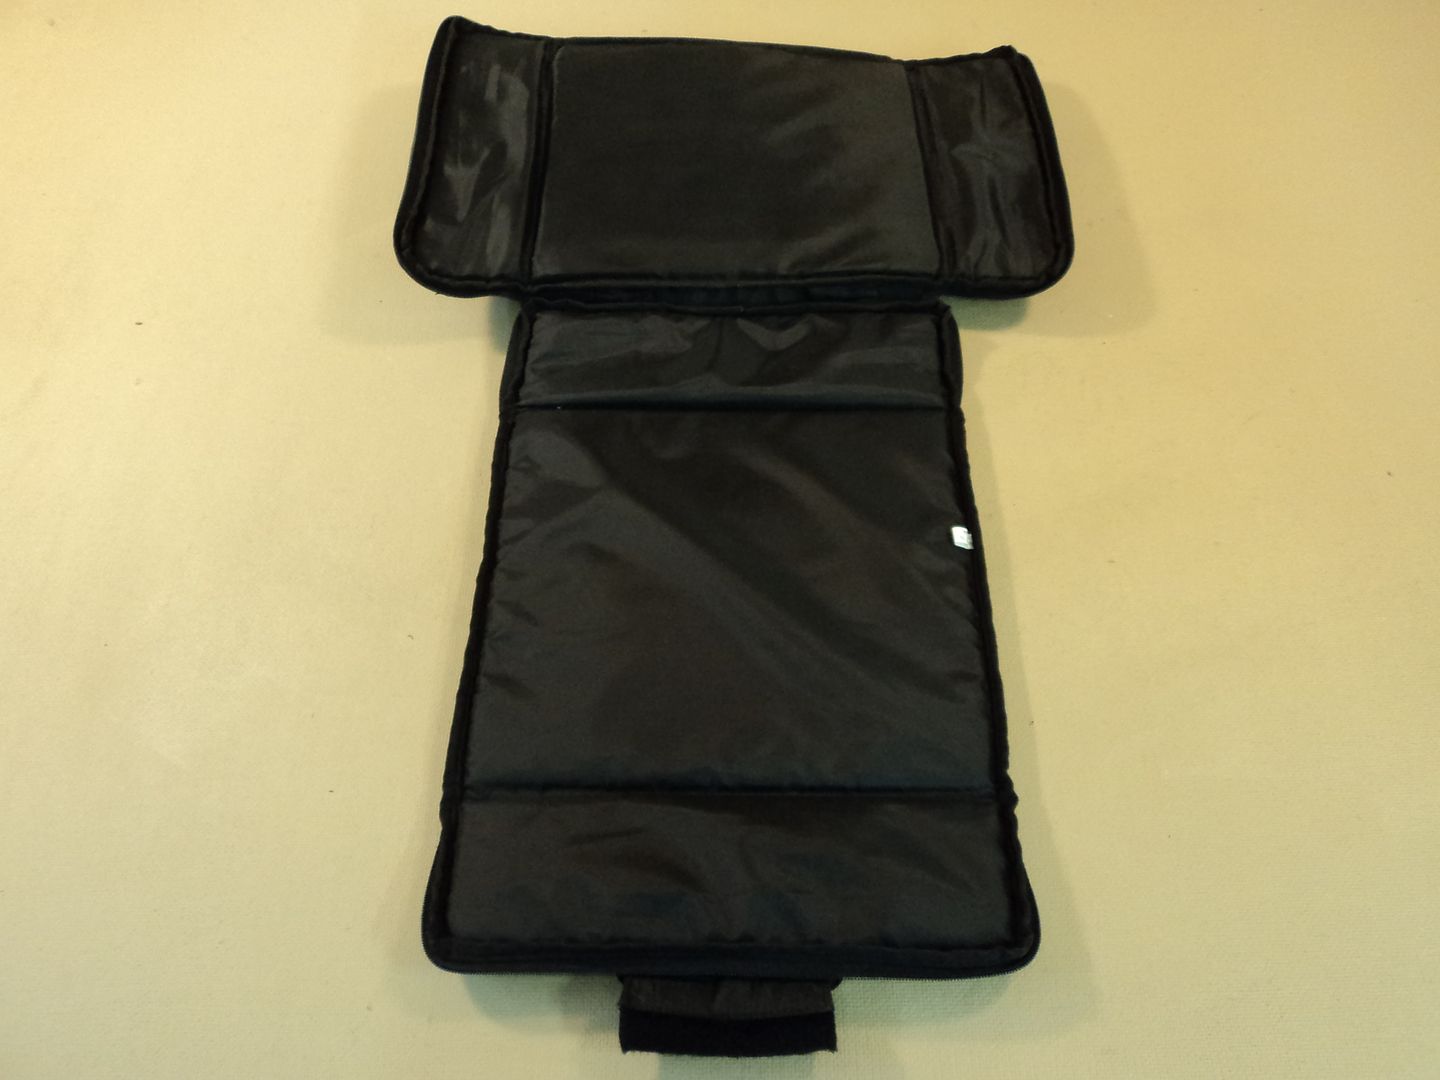 Standard 13 Inch Laptop Bag Padded Black One Exterior Pouch Shoulder ...